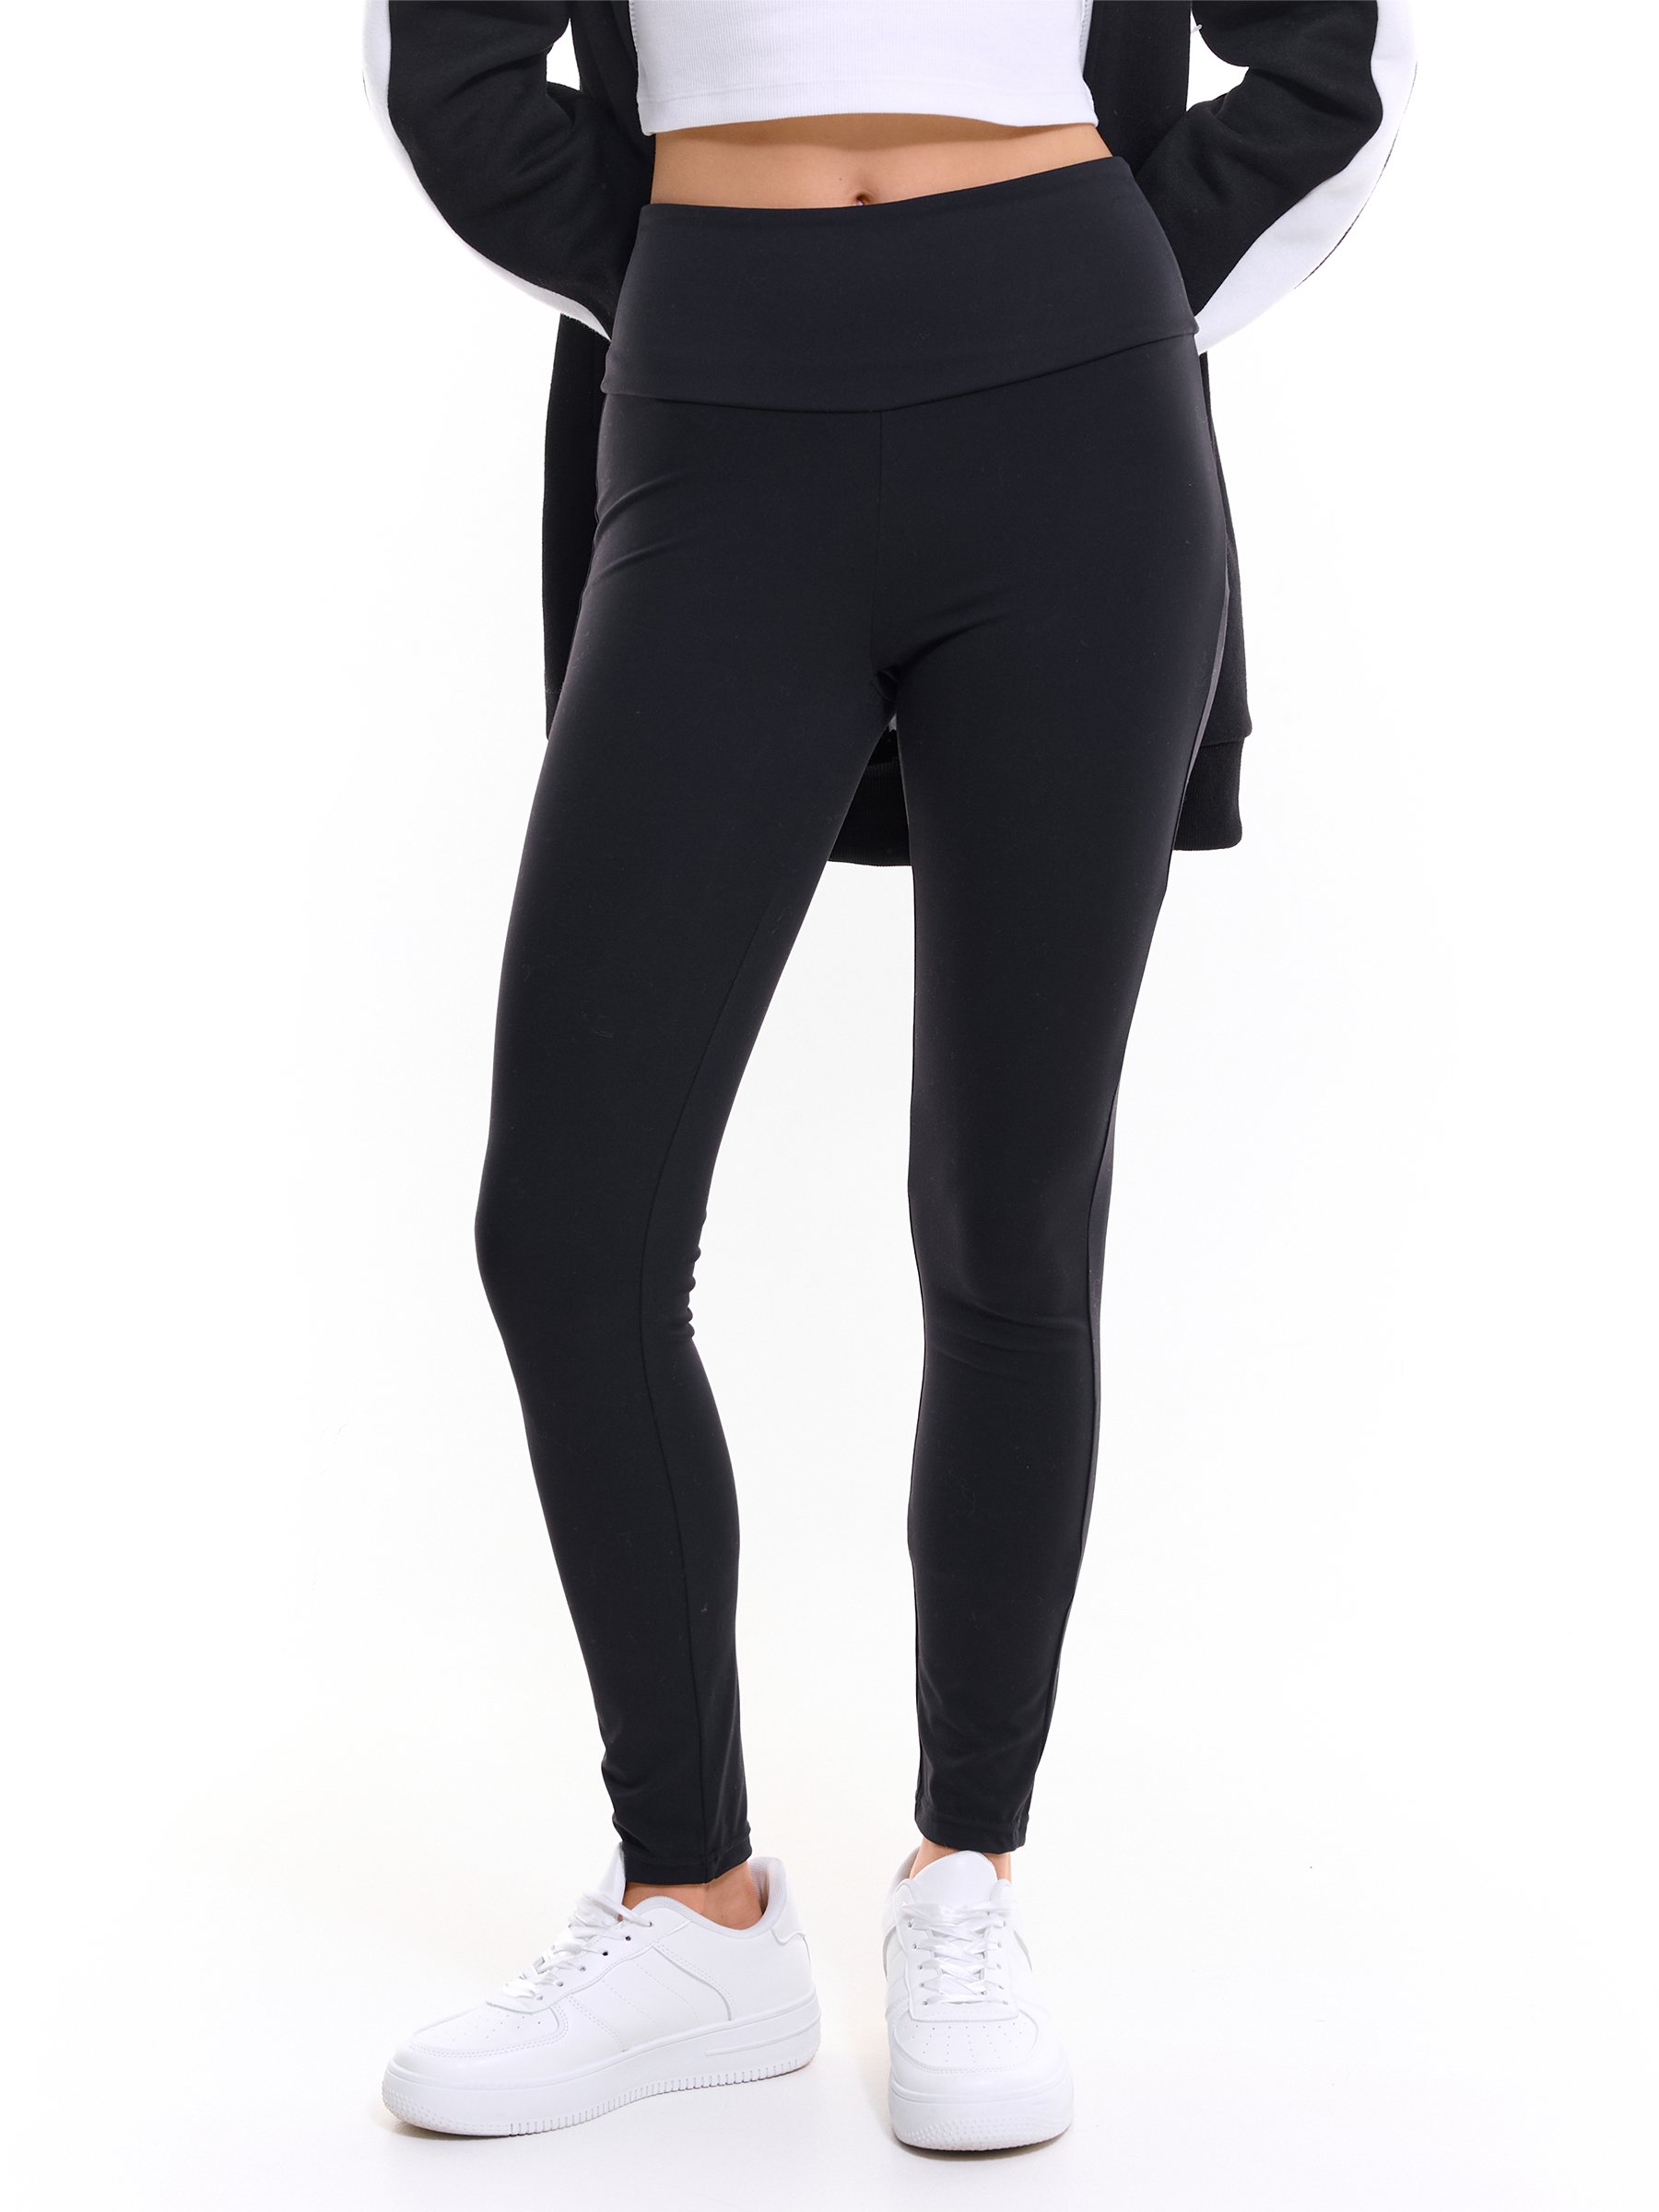 Dolce & Gabbana Black Stretch Ponte Knit Nylon Leggings Pants IT 40, US 6  $845 | eBay